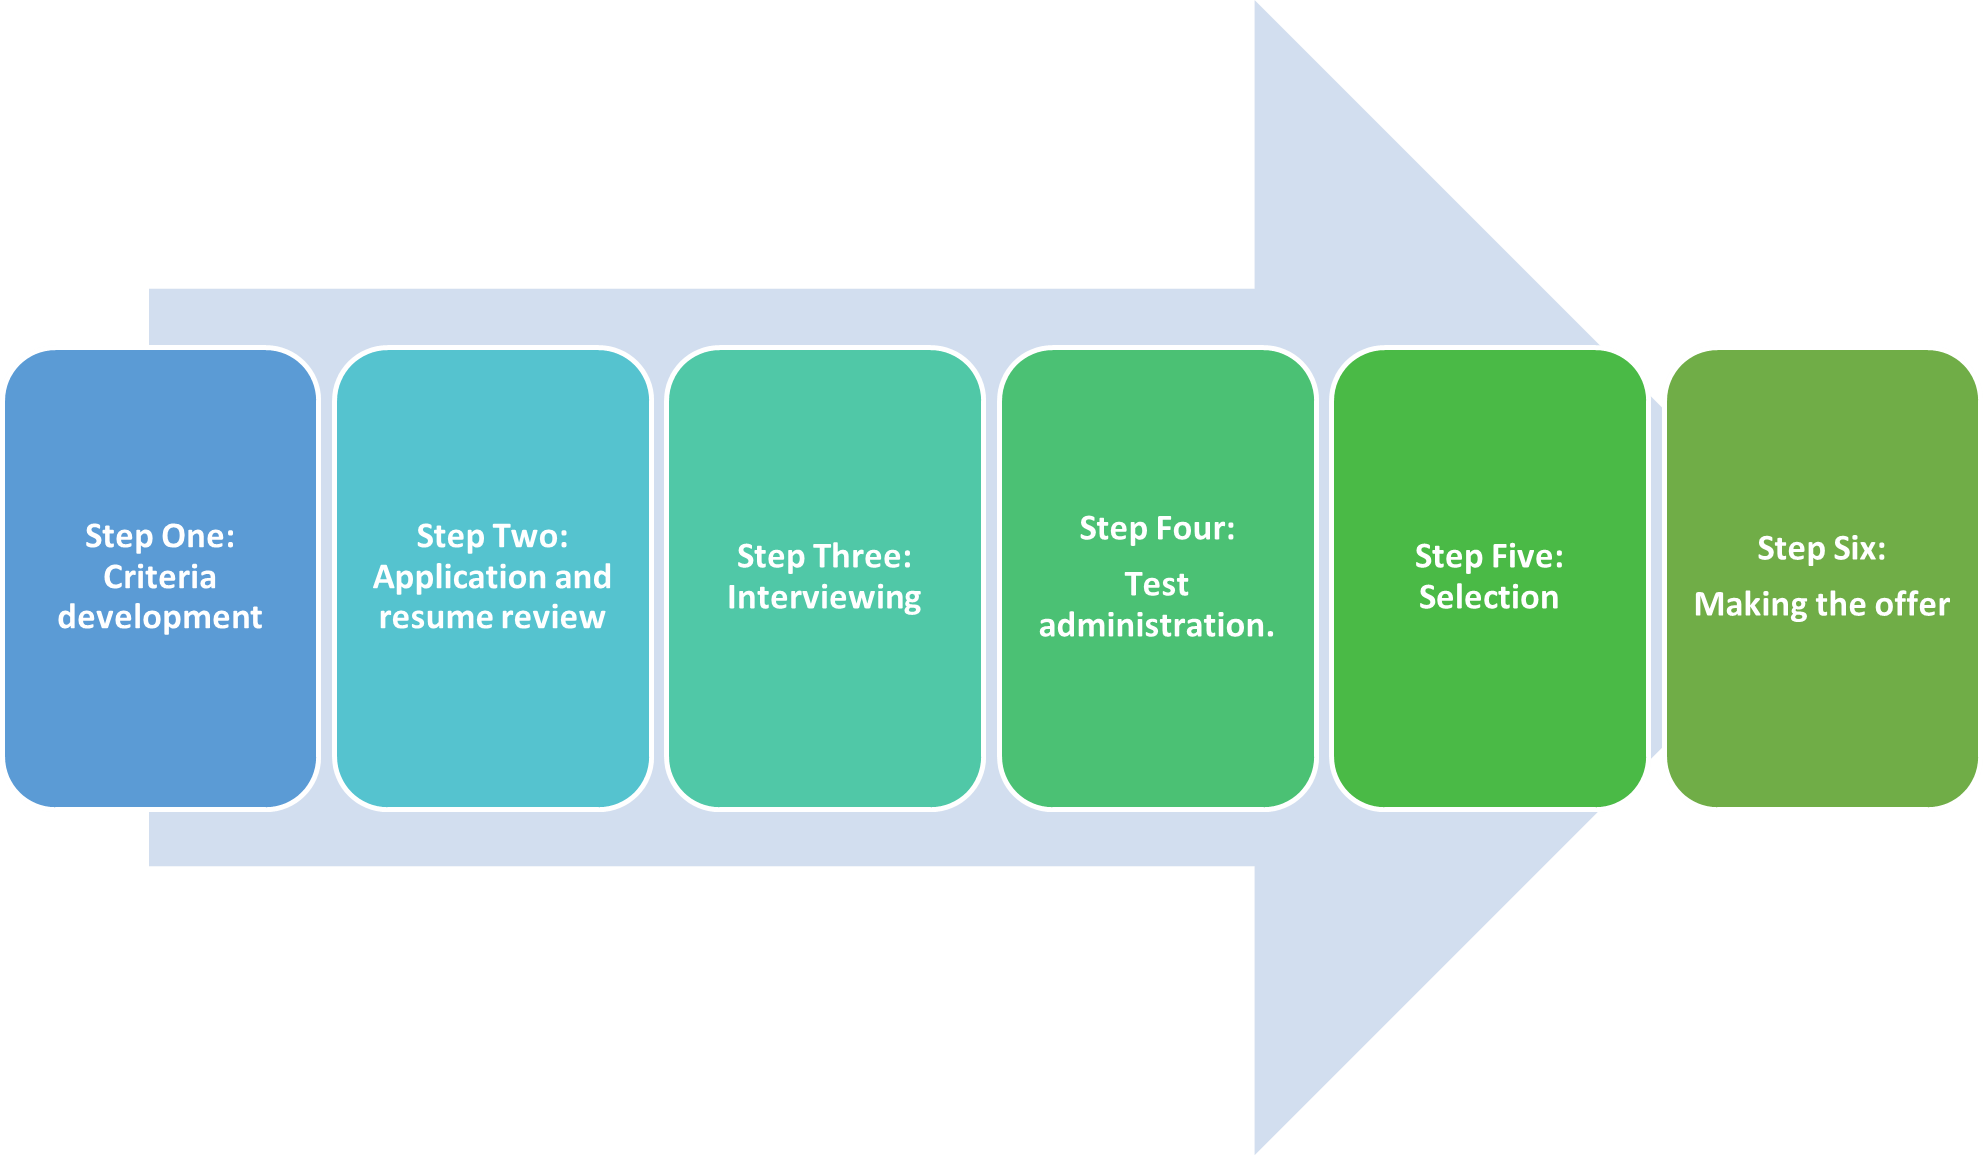 6 step selection process - described below